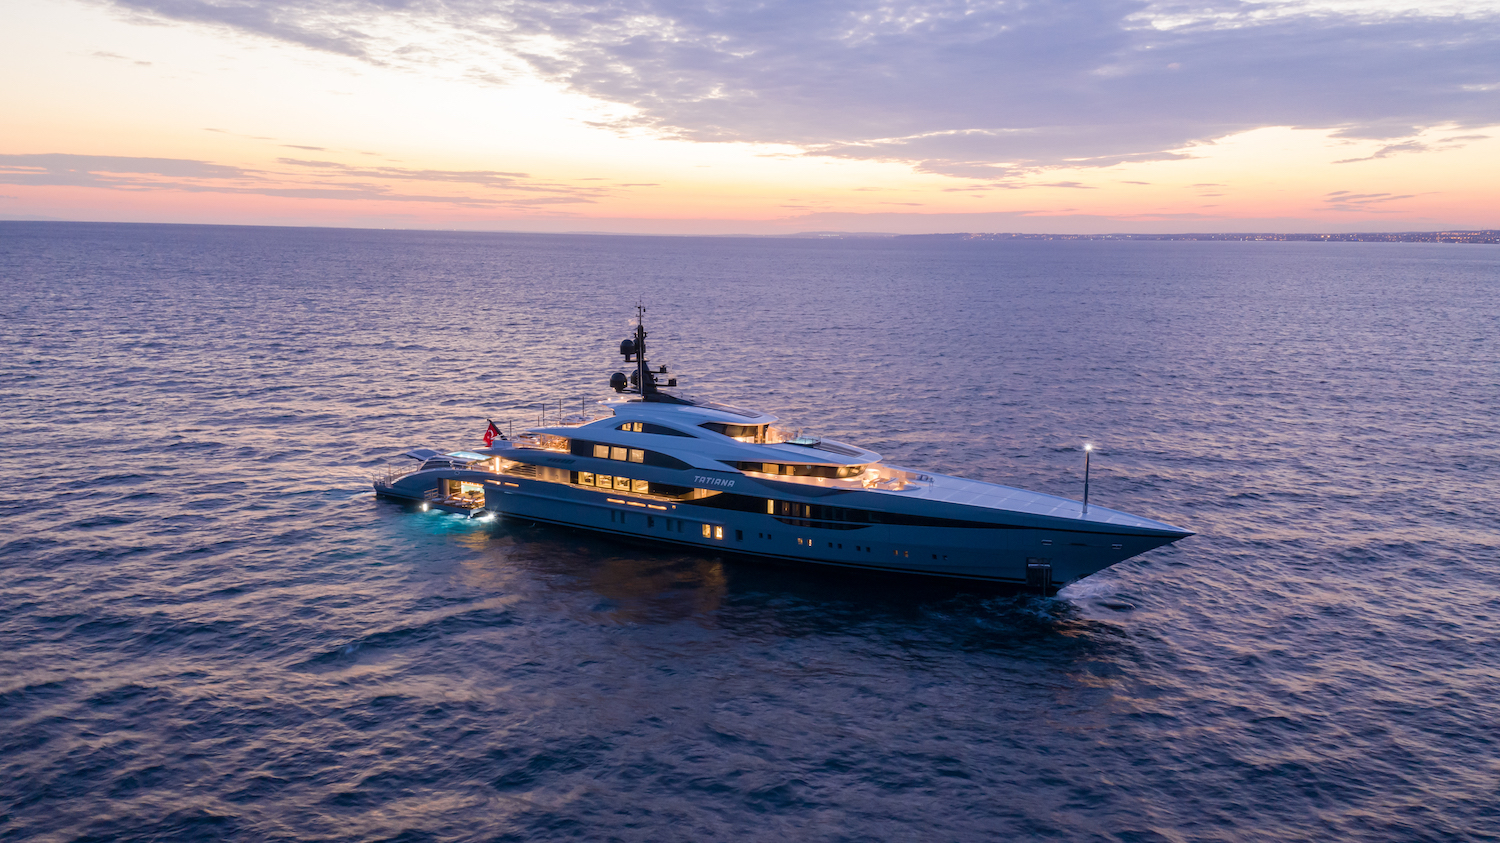 80m Superyacht At Sunset